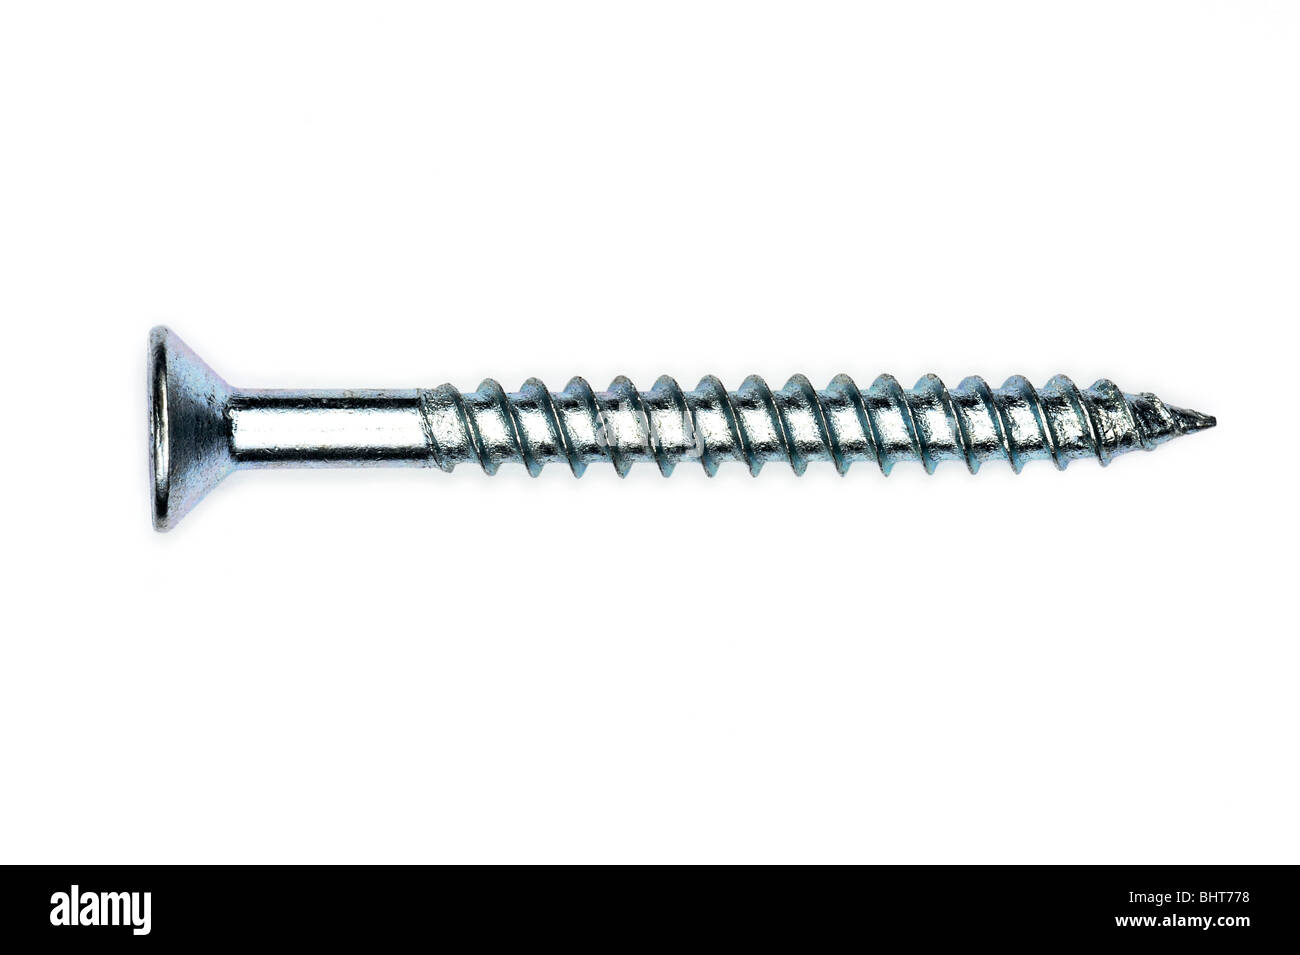 A silver screw Stock Photo